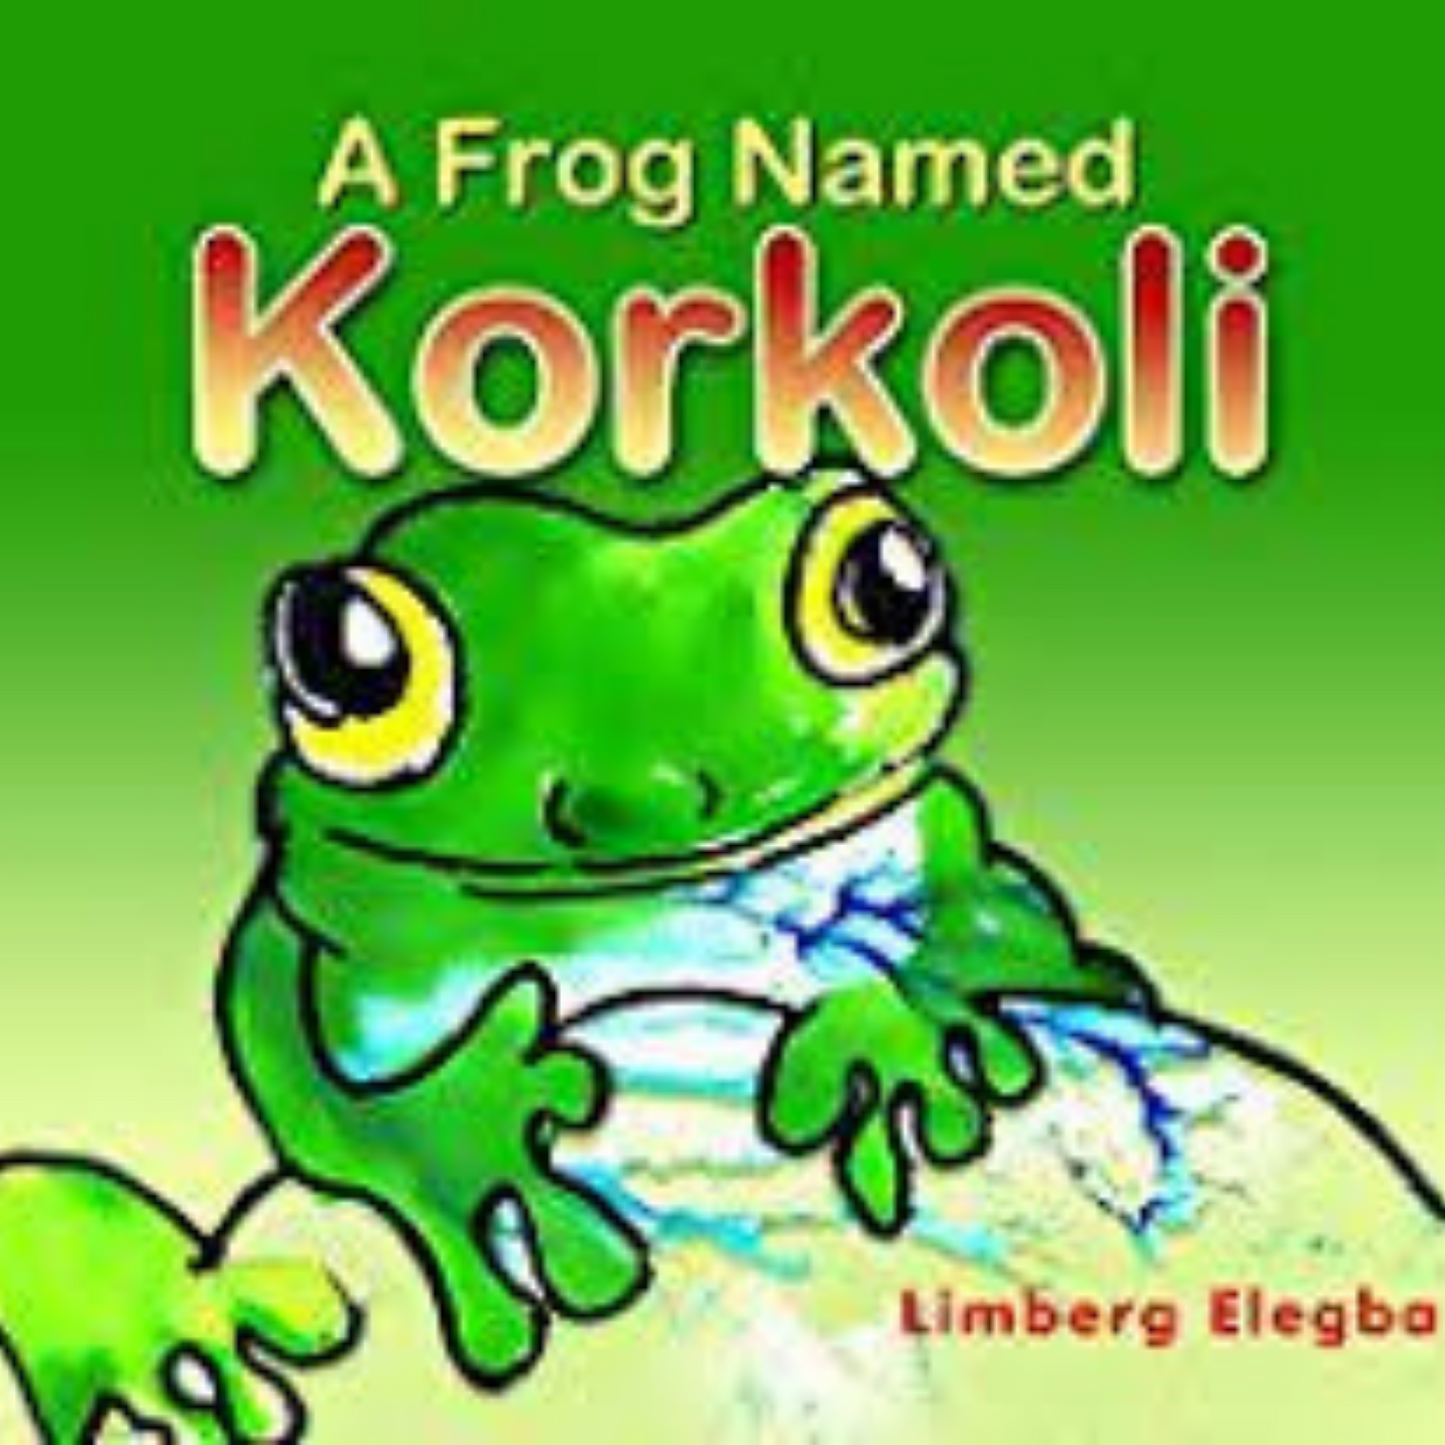 A Frog Named Korkoli